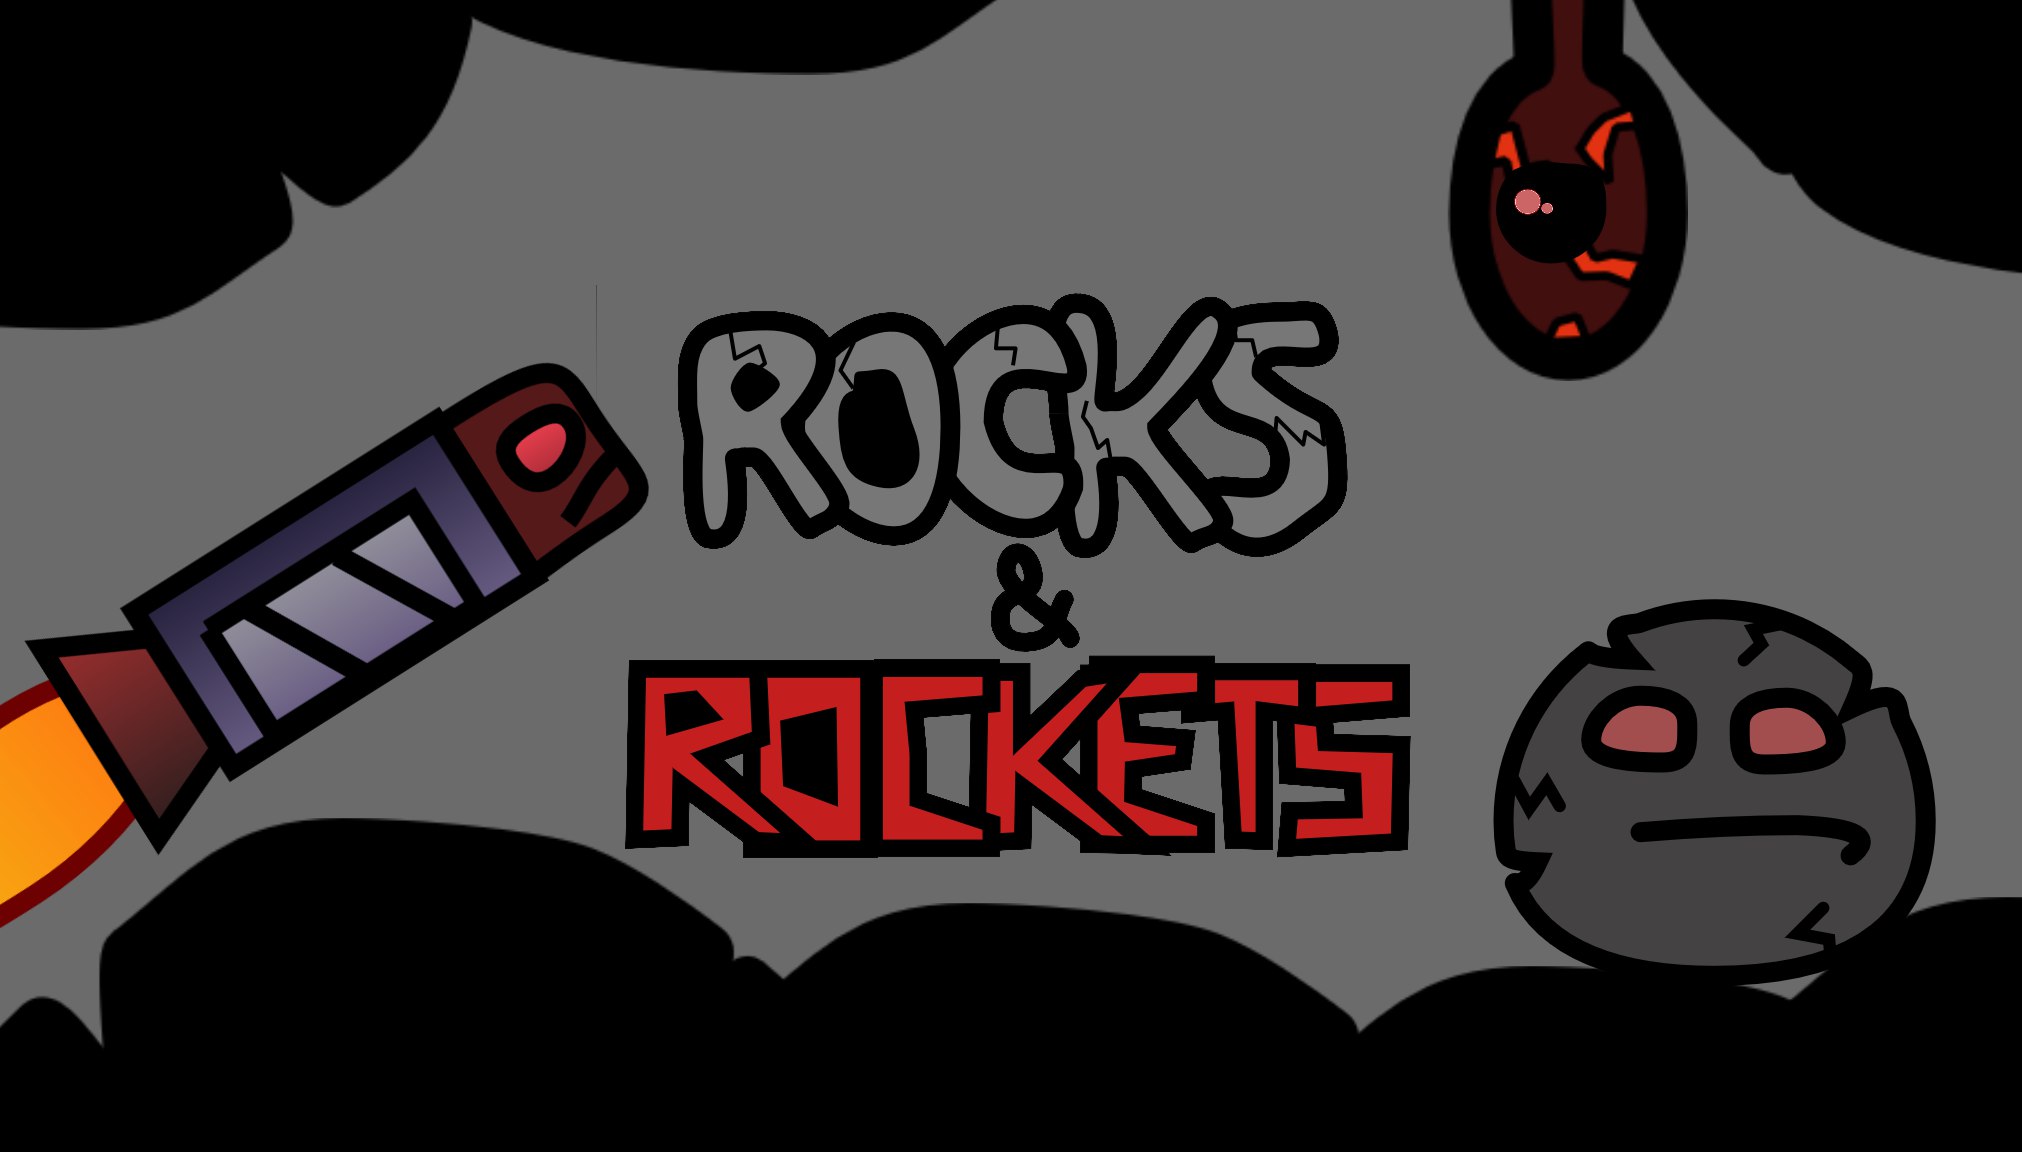 Rocks and Rockets Soundtrack screenshot